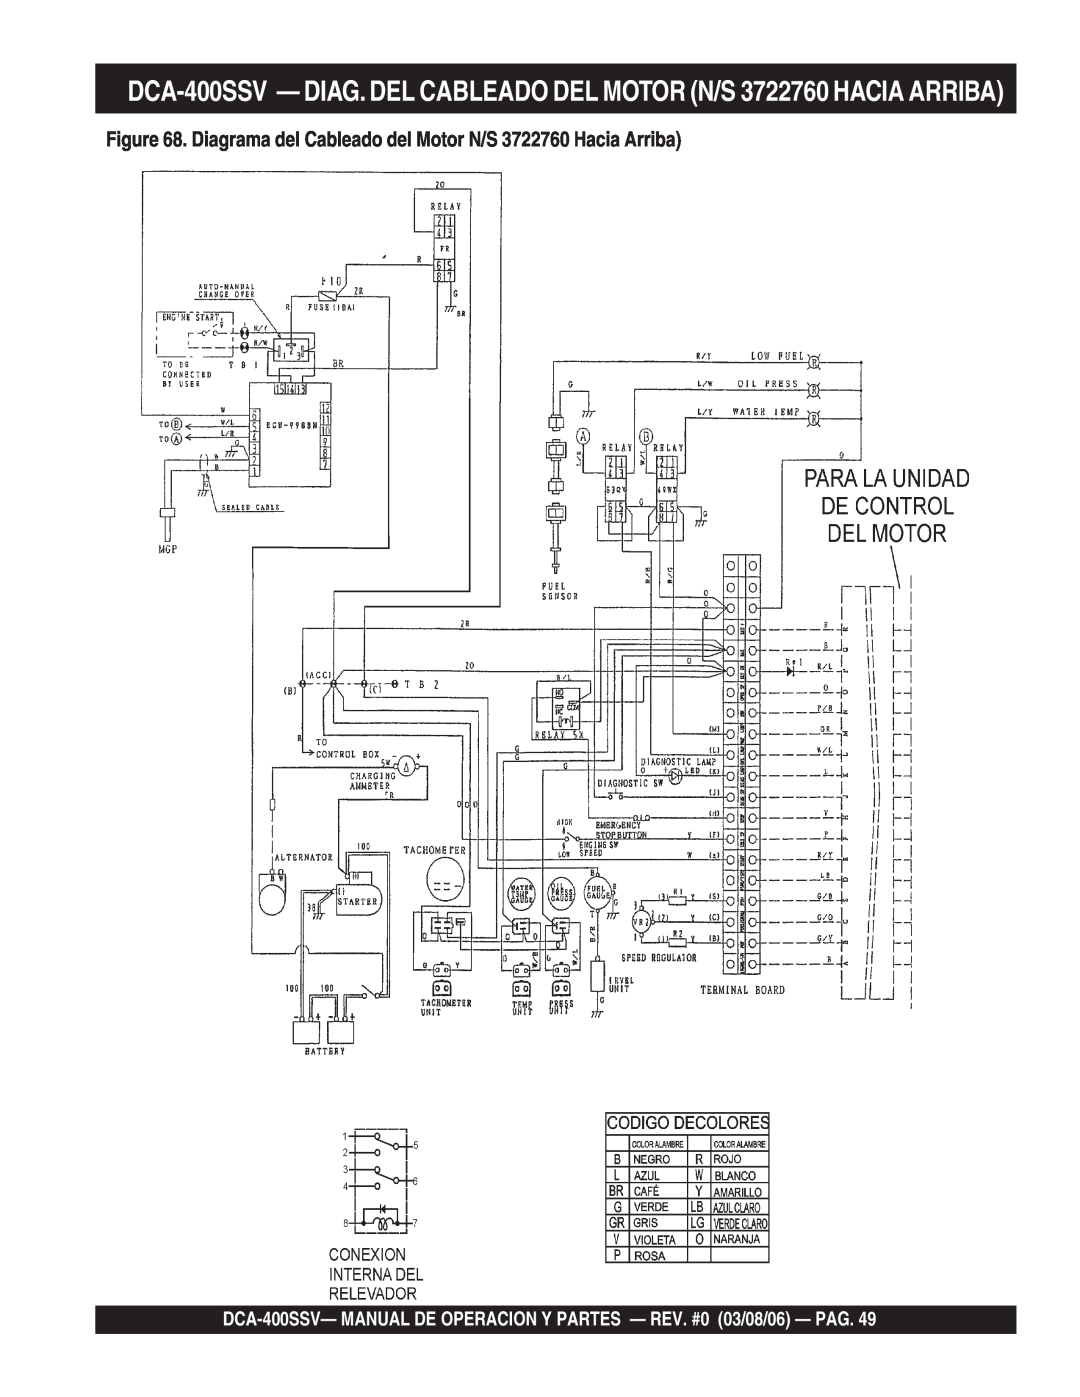 Multiquip DCA-400SSV operation manual 